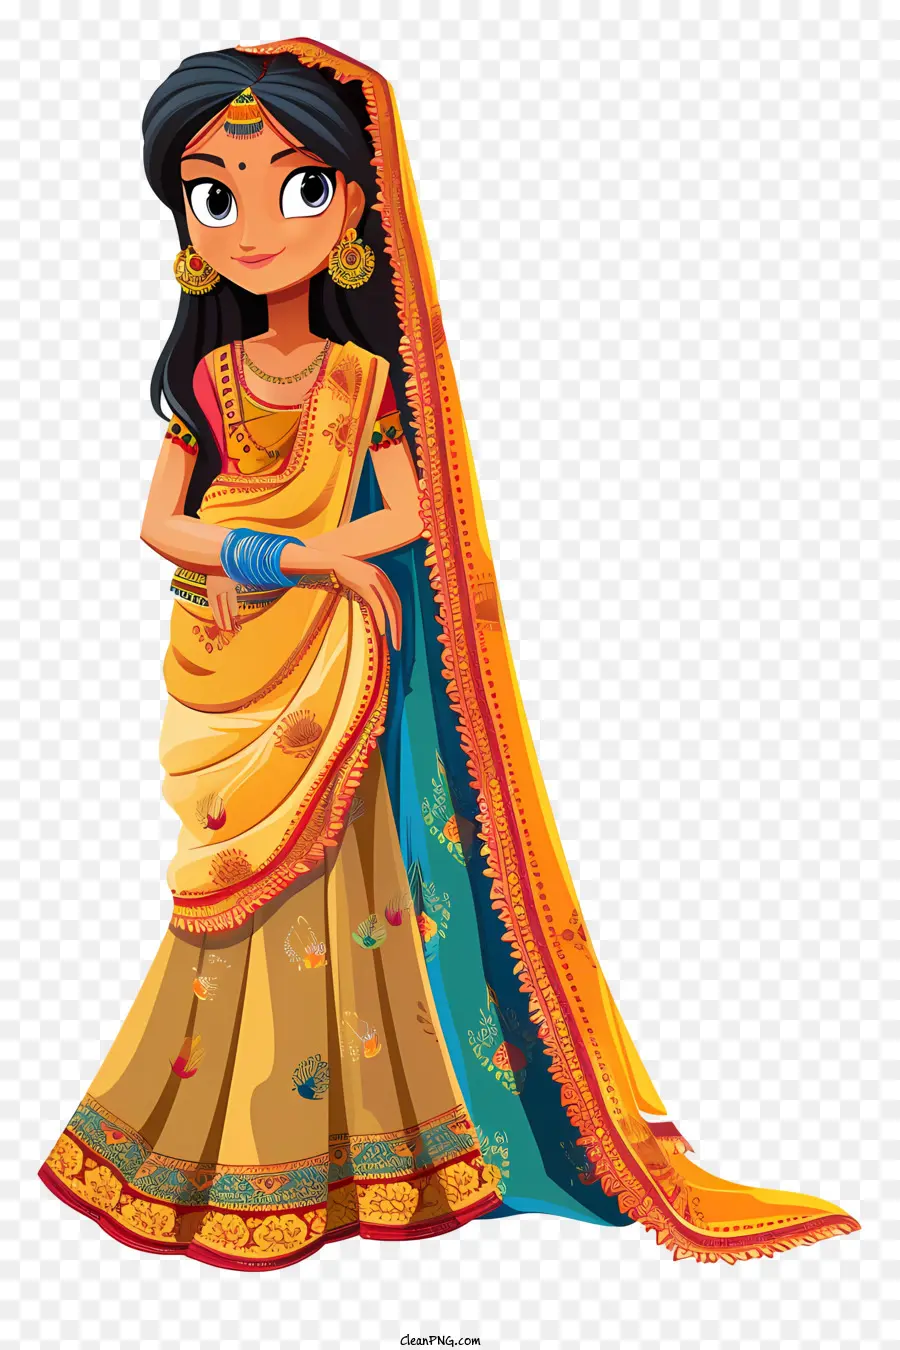 indian woman cartoon indian fashion sari traditional clothing gold jewelry